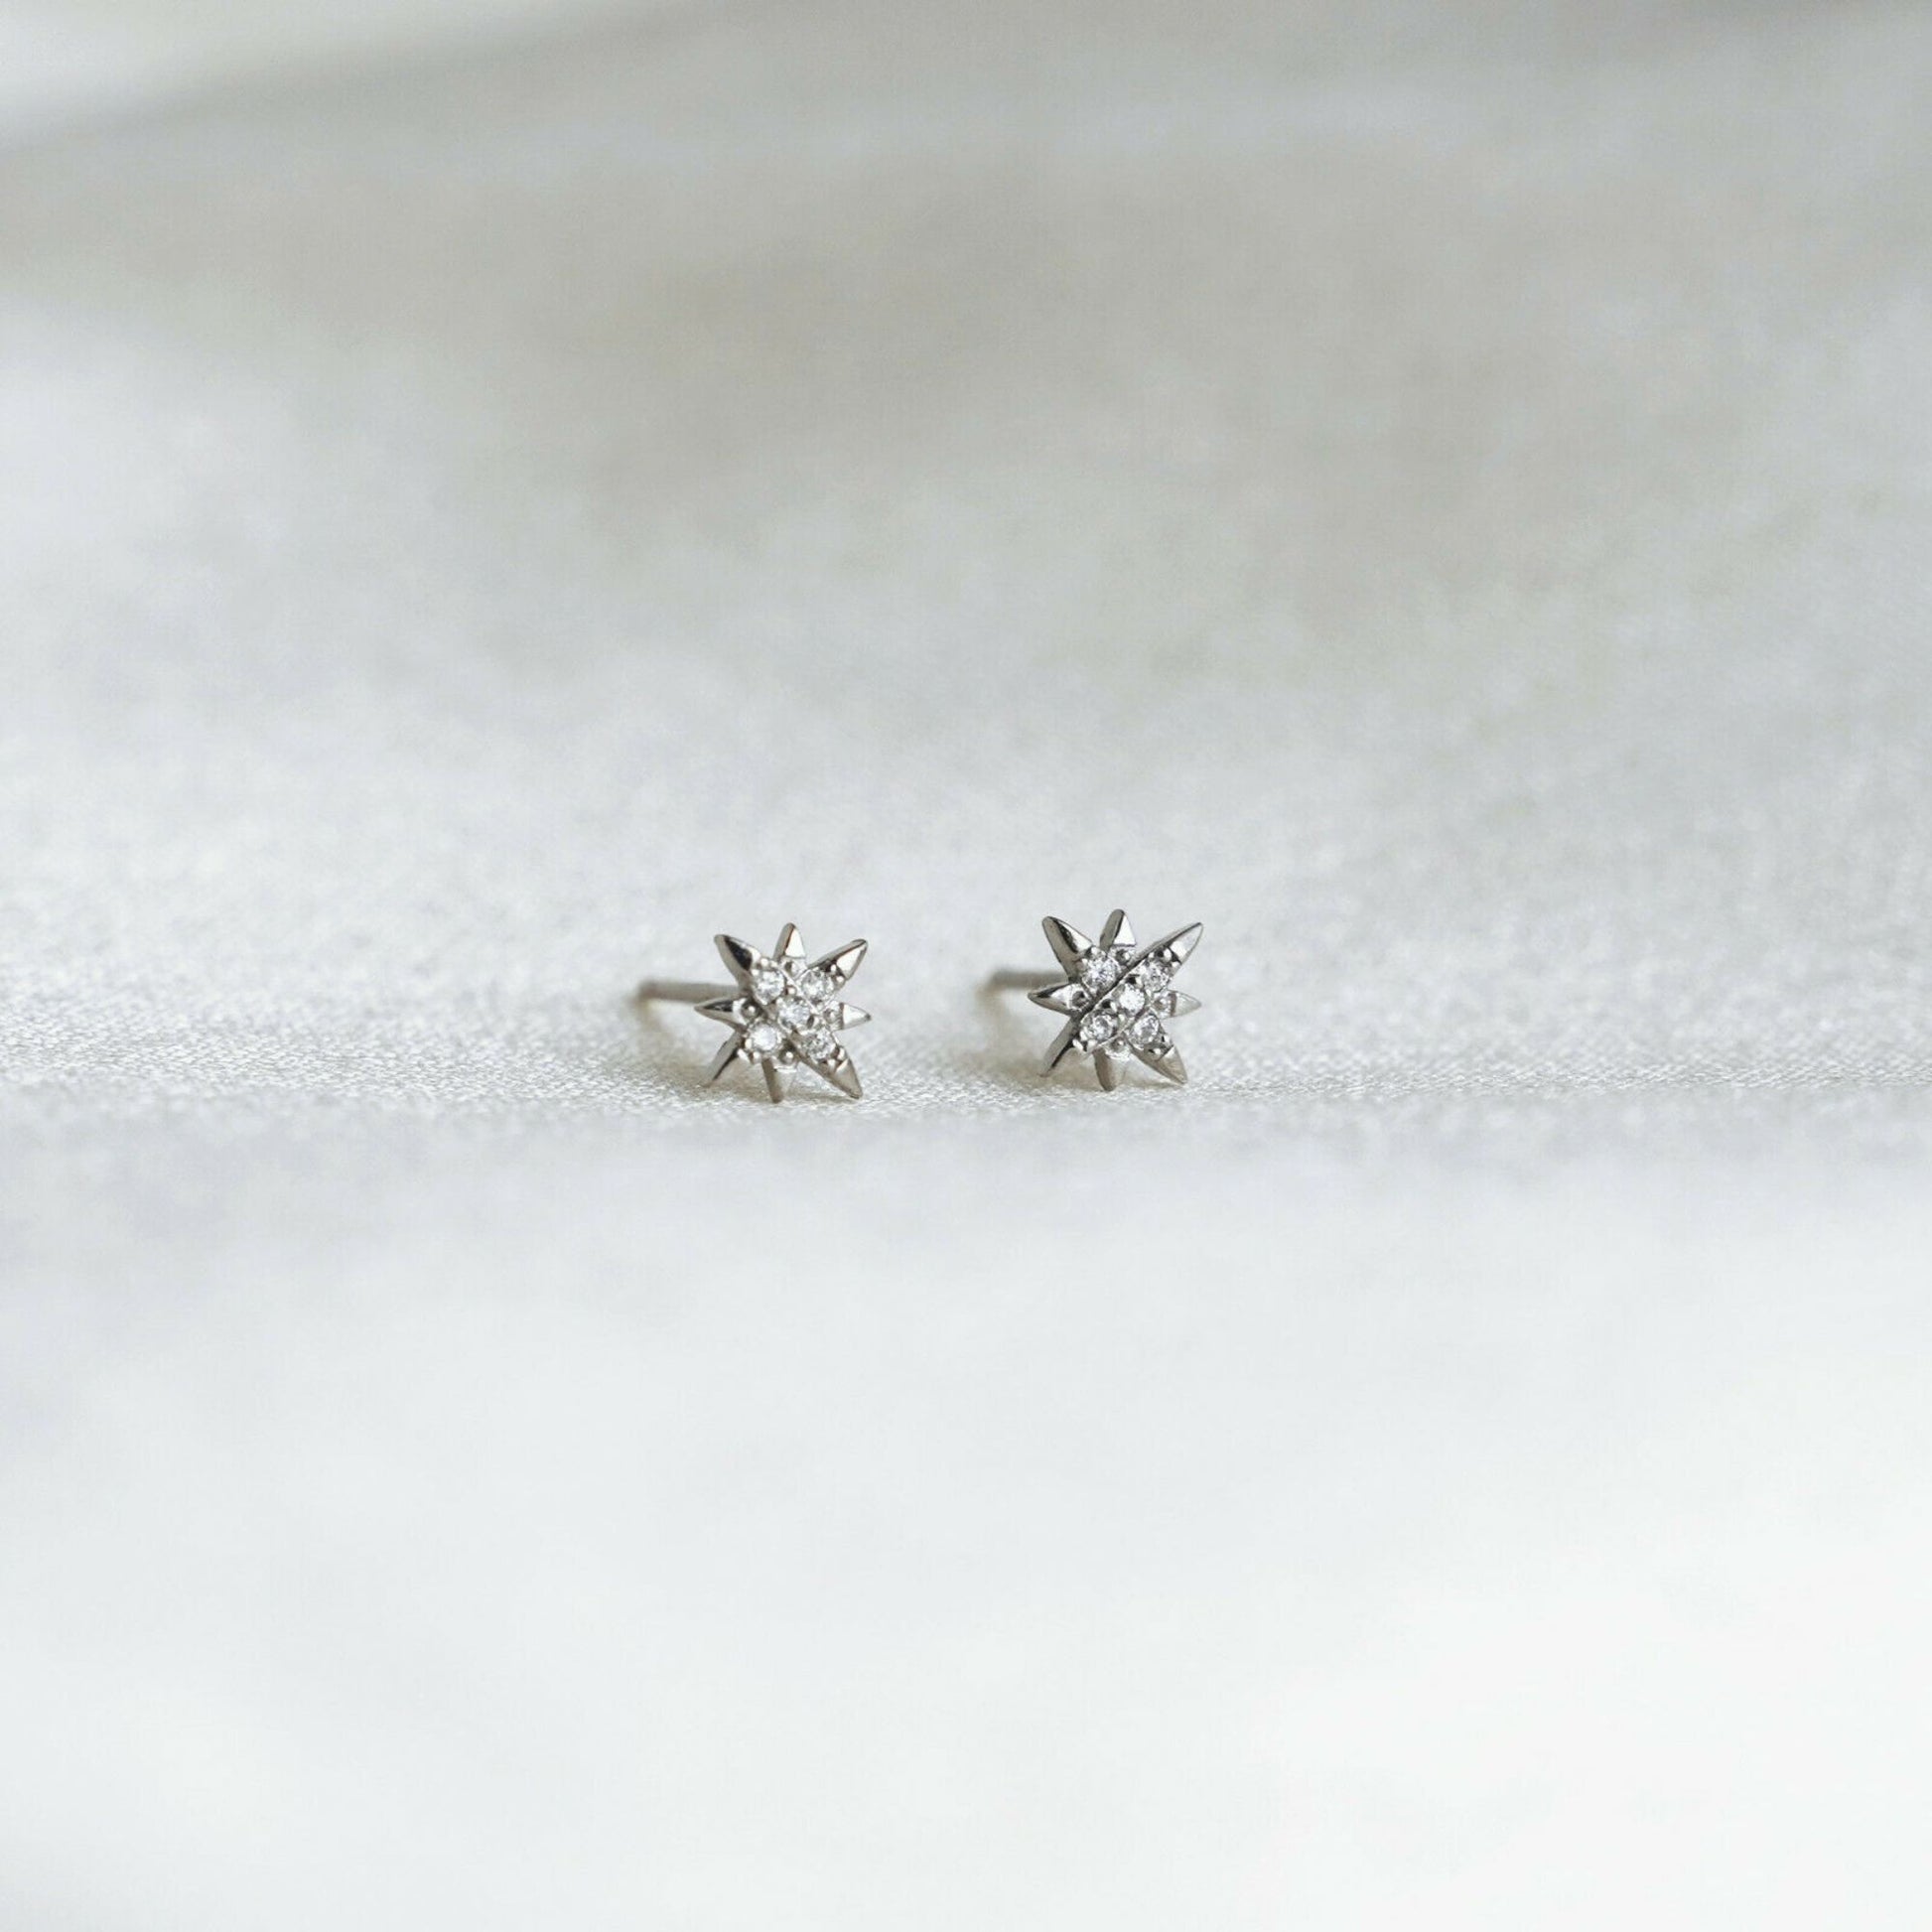 925 Sterling Silver Star Stud Earrings with CZ North Pole Star Design - sugarkittenlondon